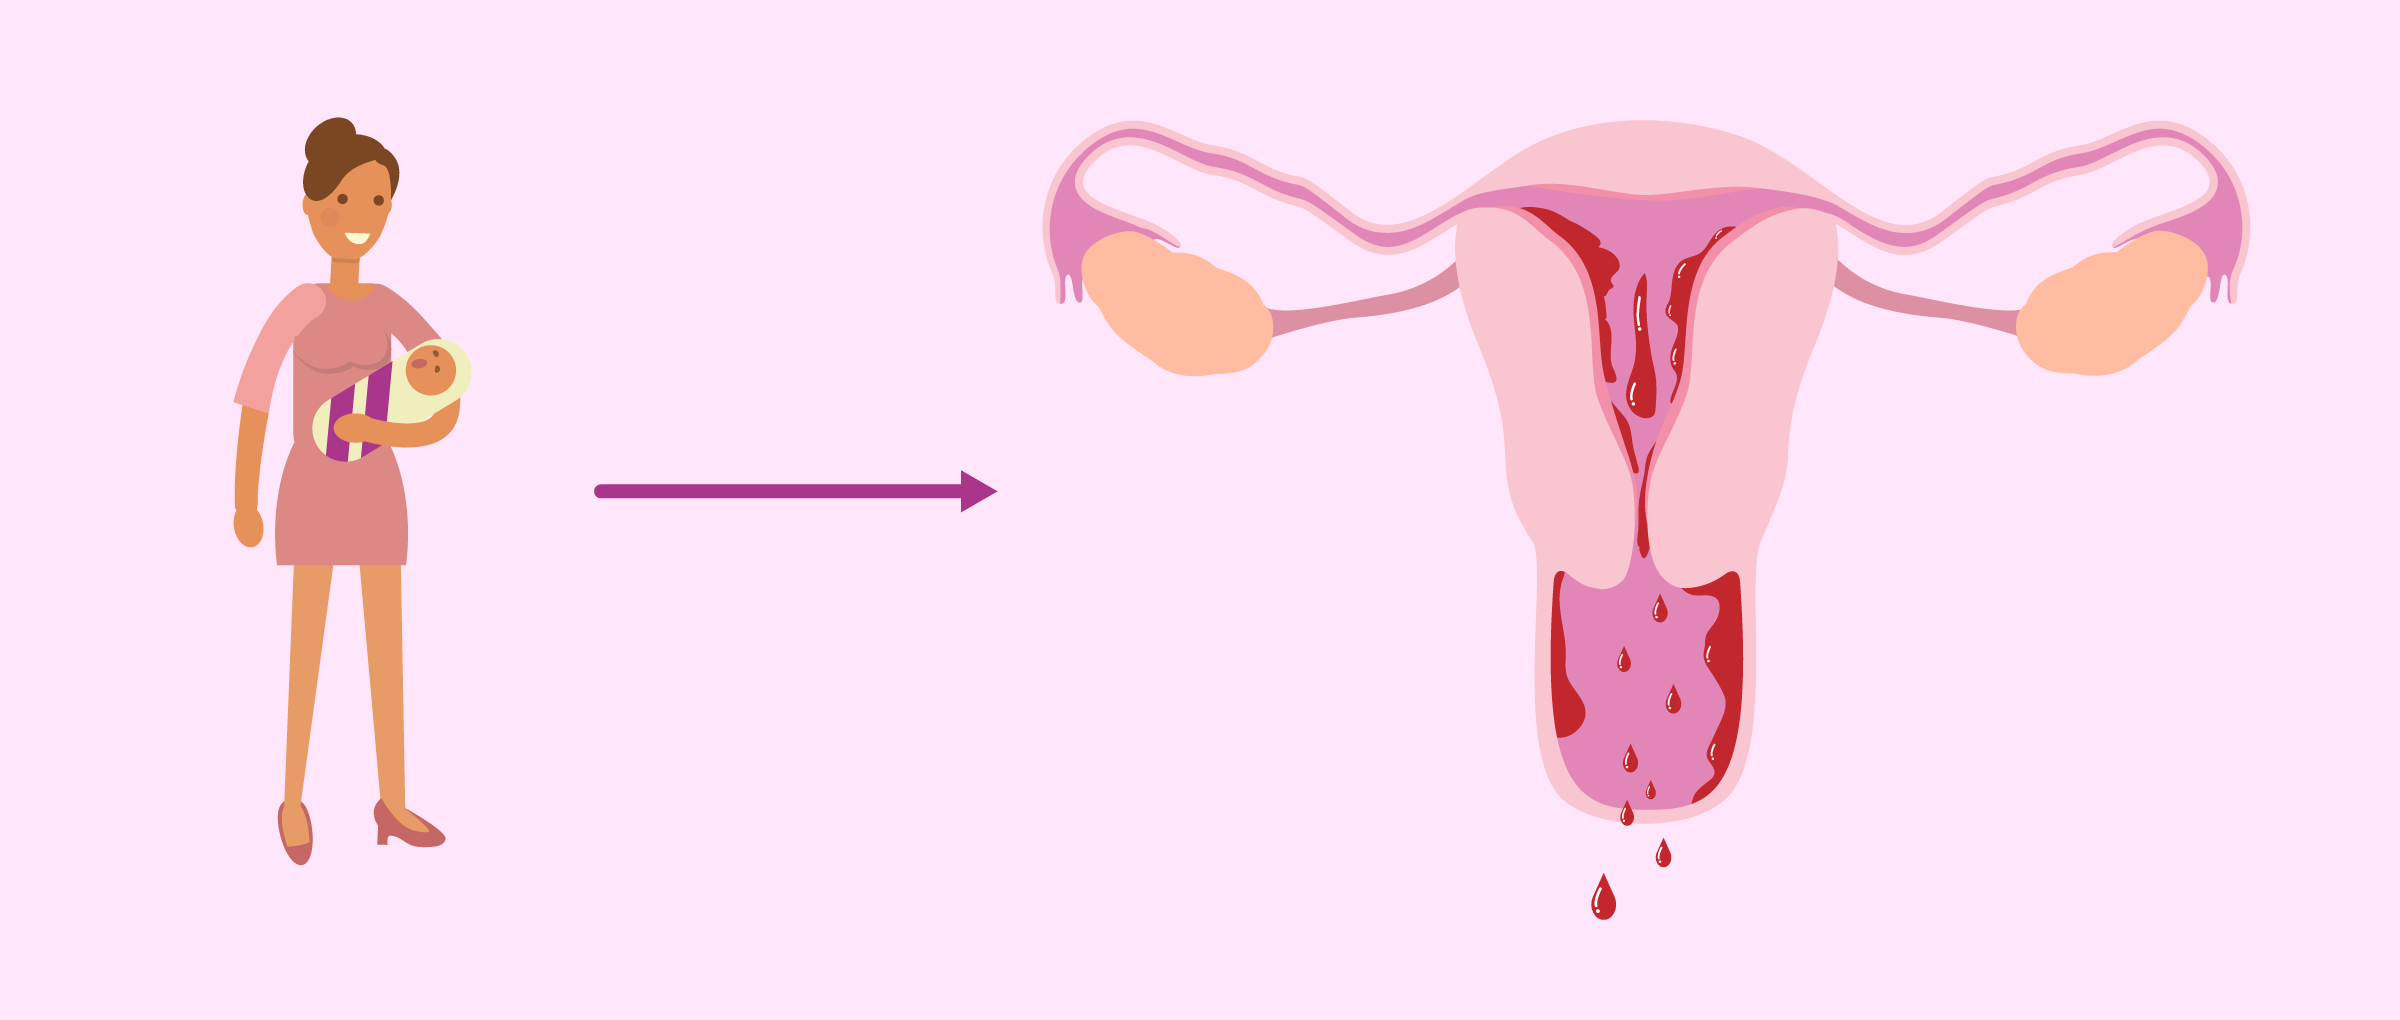 Period after childbirth